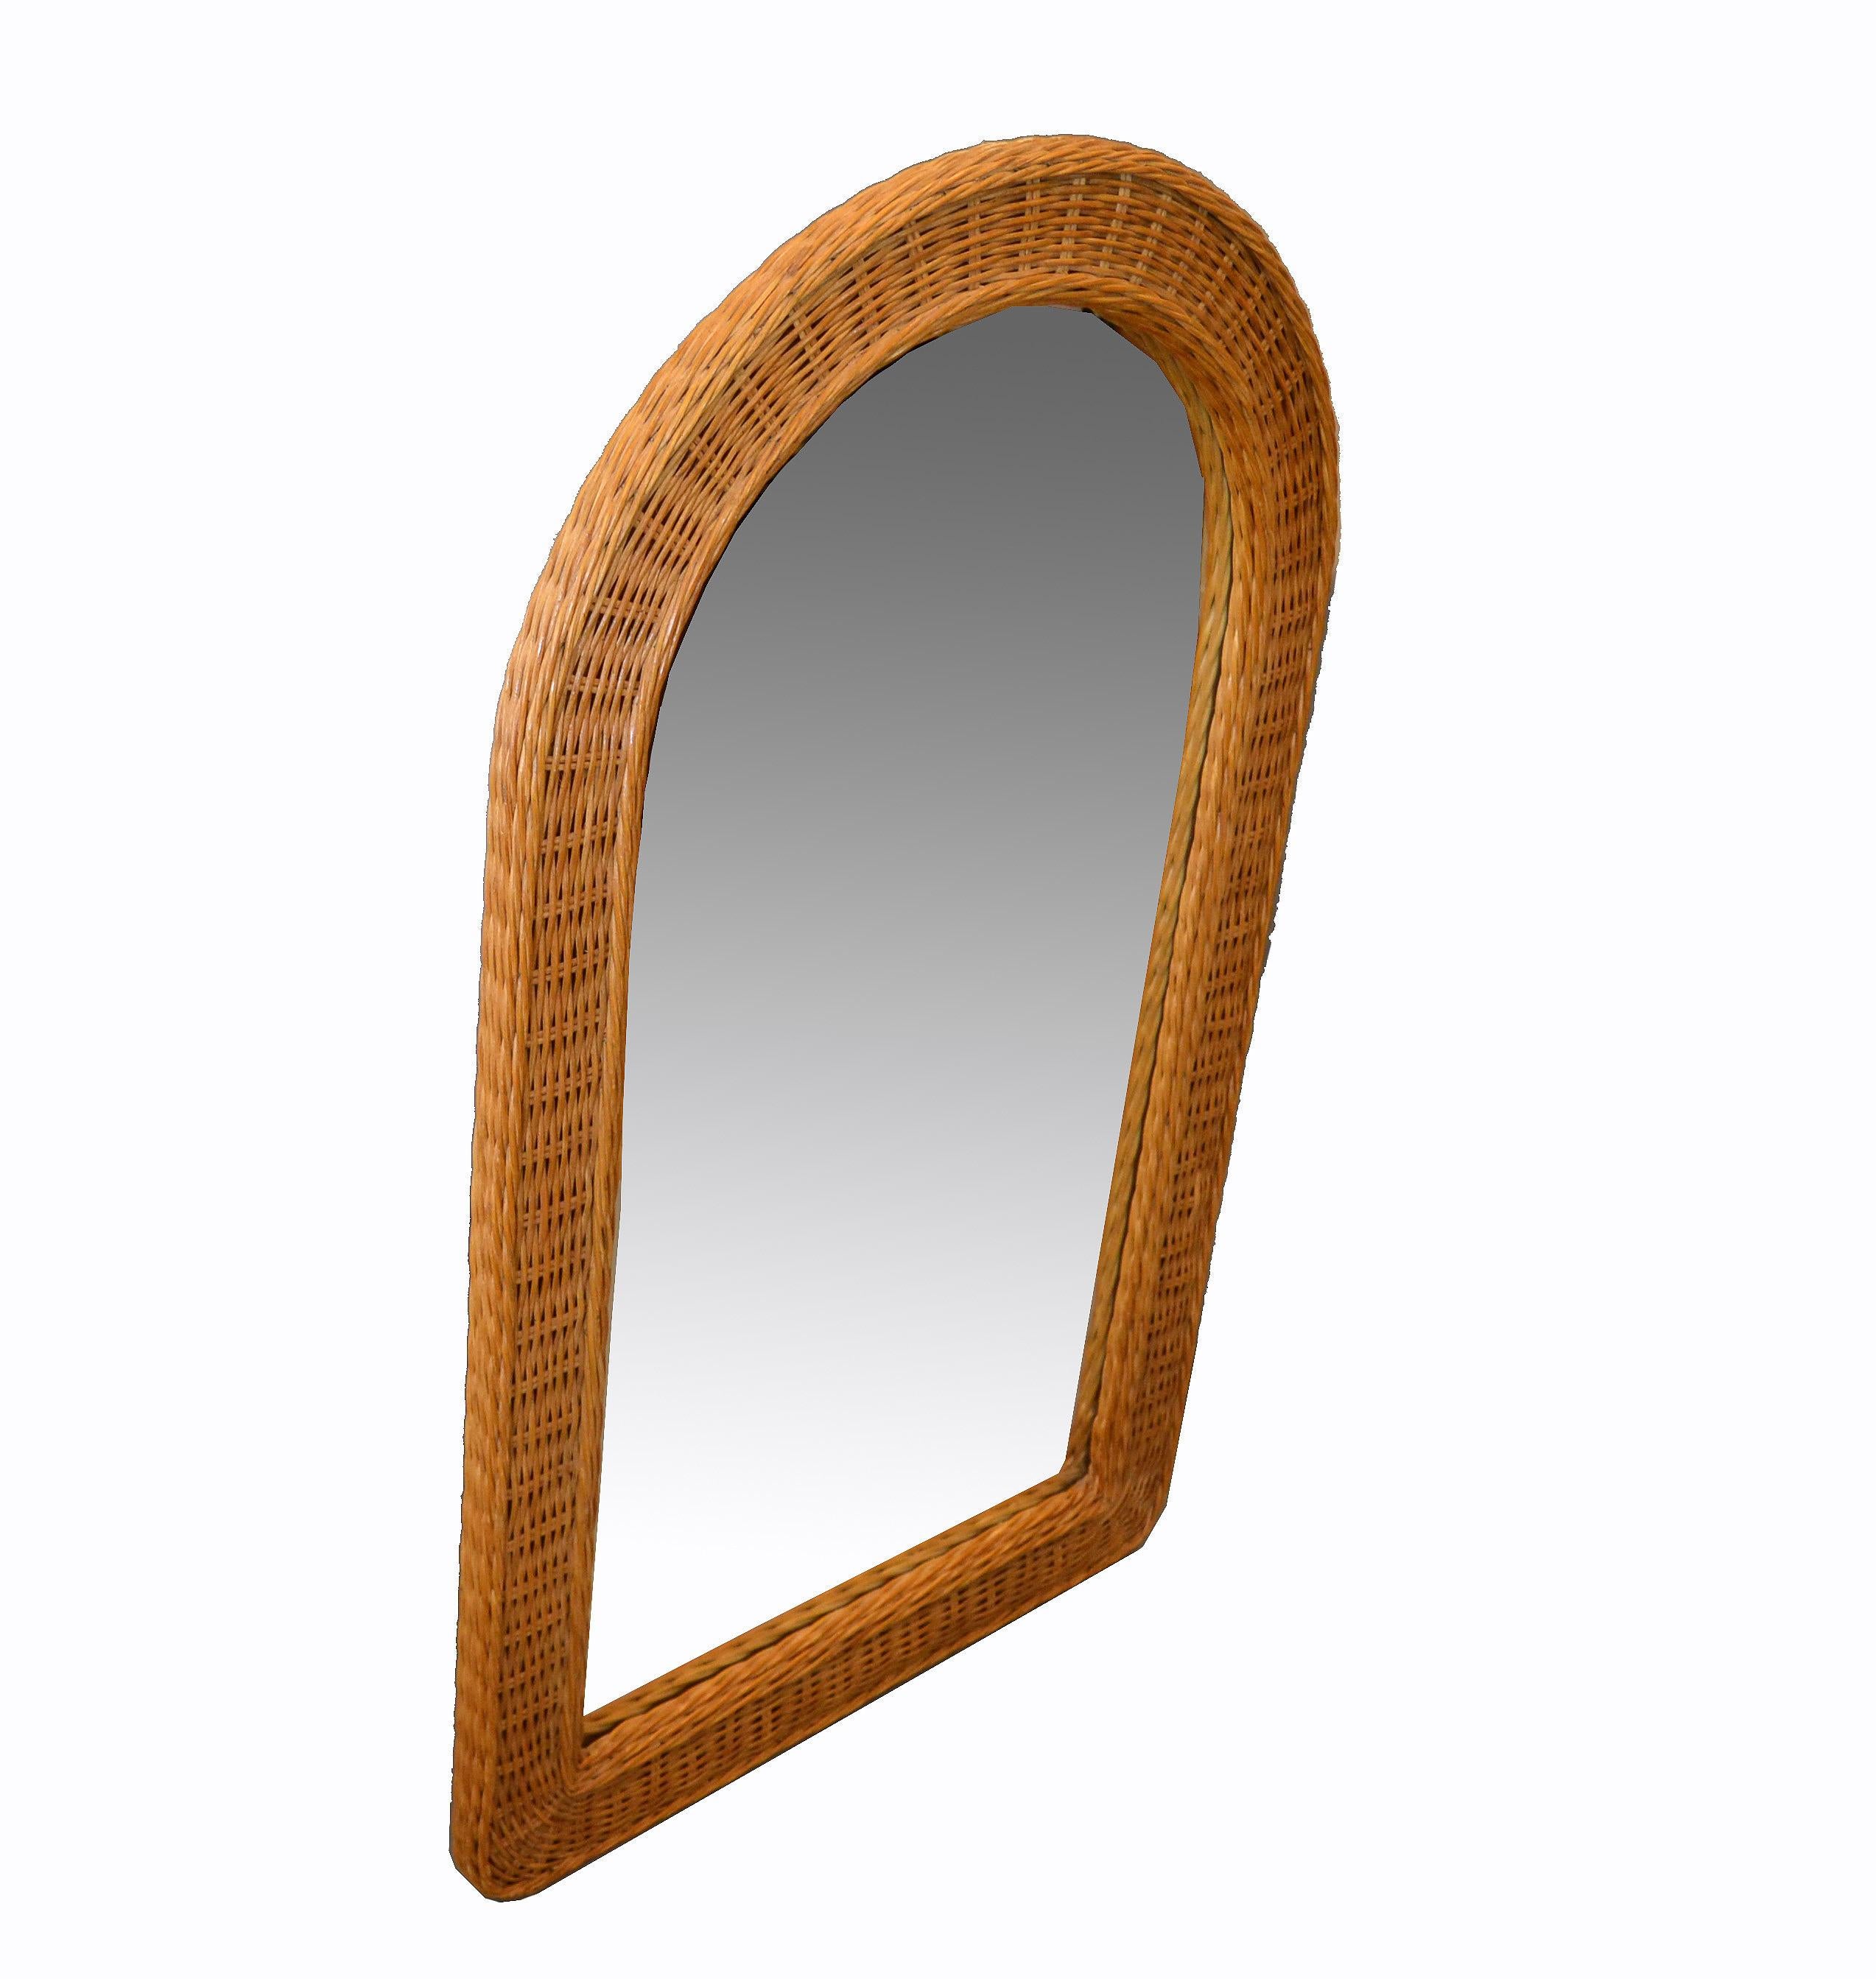 Mid-Century Modern Arch Handwoven Rattan / Wicker Wall Mirror Boho Chic 1